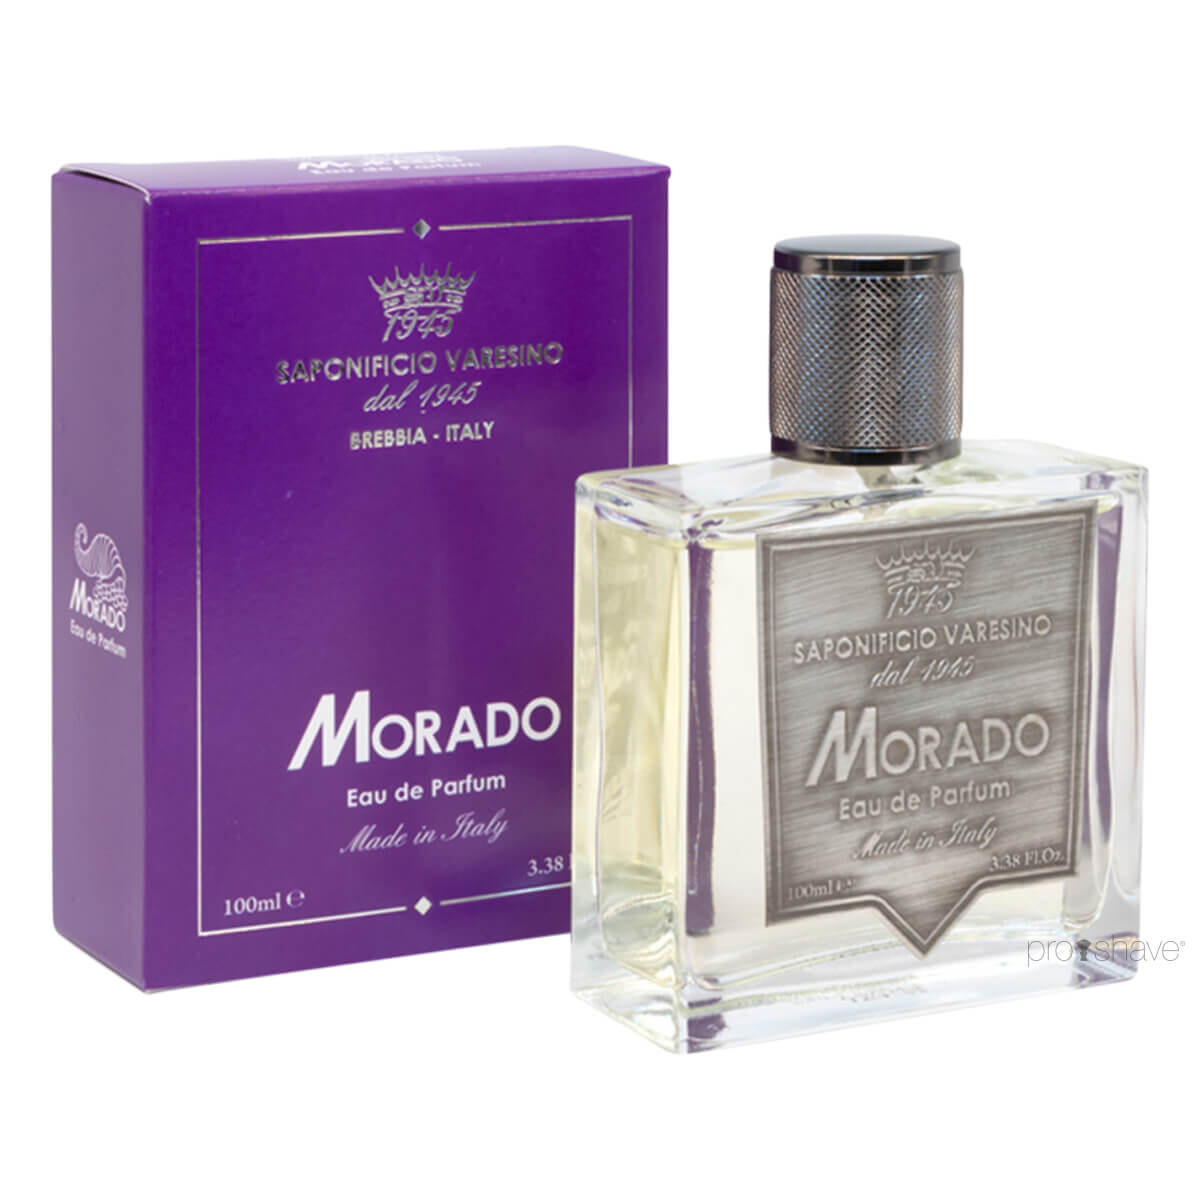 Se Saponificio Varesino Eau de Parfum, Morado, 100 ml. hos Proshave